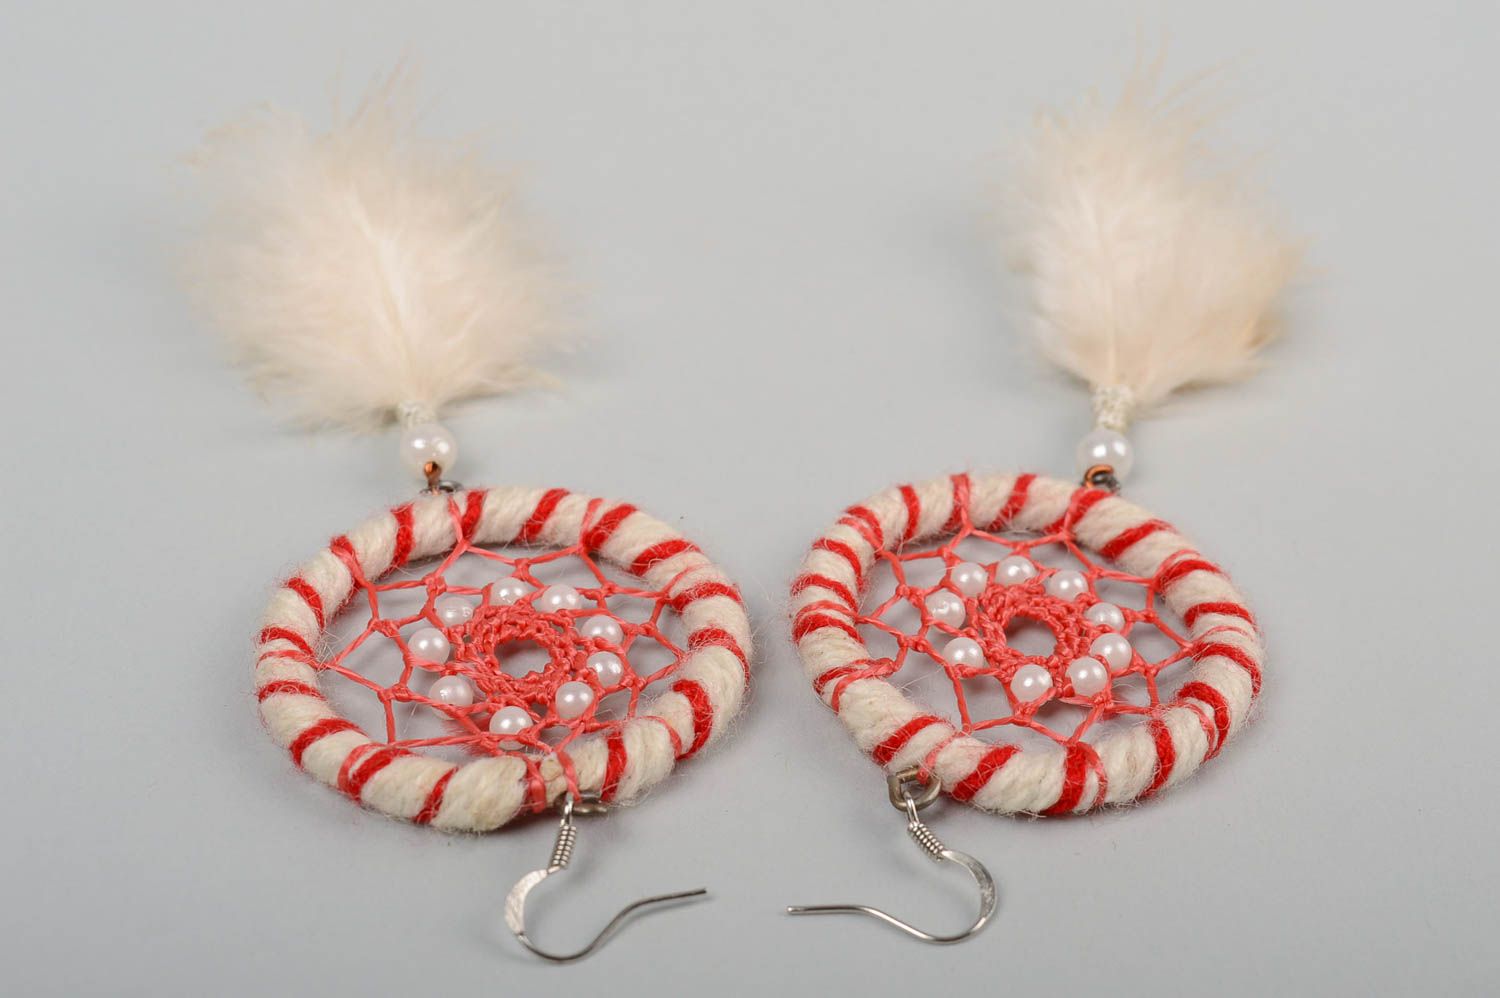 Homemade earrings large dreamcatcher earrings designer jewelry gifts for women photo 3